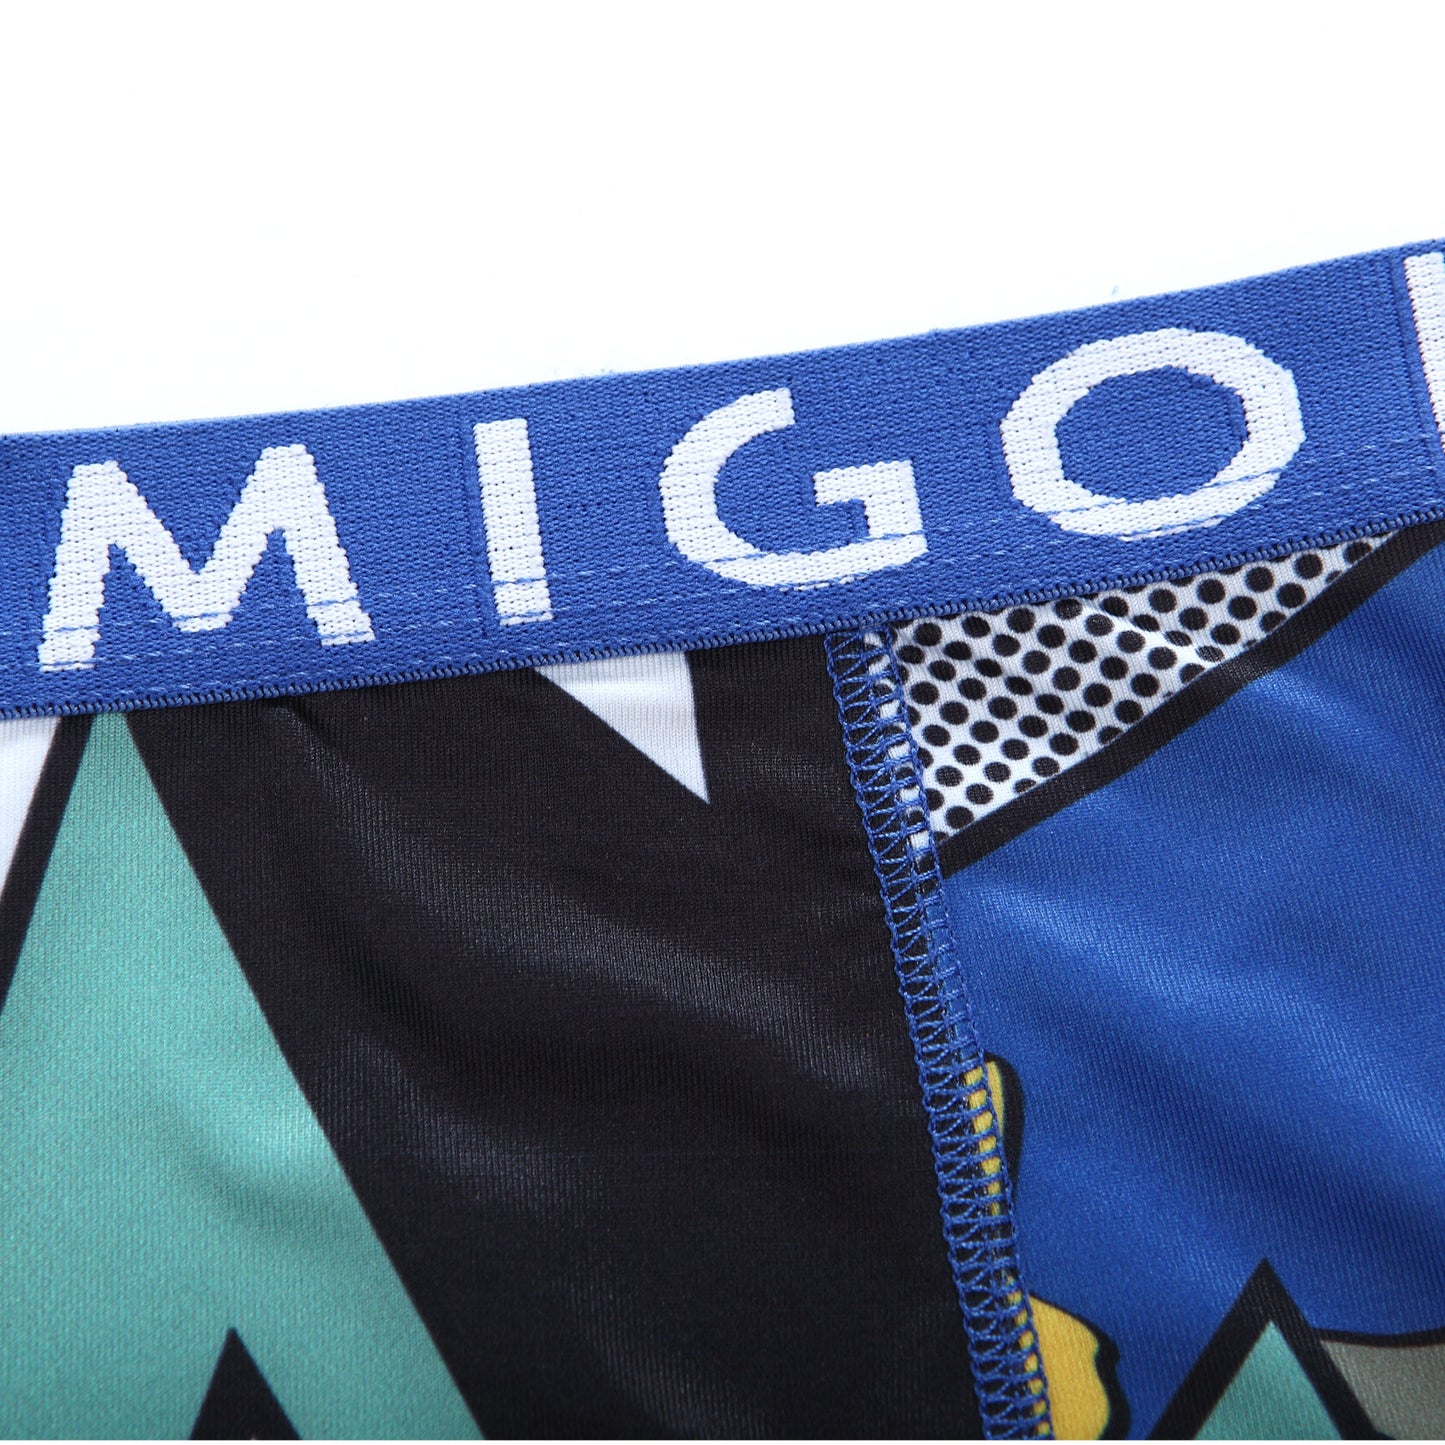 Women's Scene Mini Shorts 3 in 1 Multipacks - [MIGO] - [Hong Kong Brand] - [Menswear] - [本地品牌] - [男裝] - [運動服] - [casual wear] 